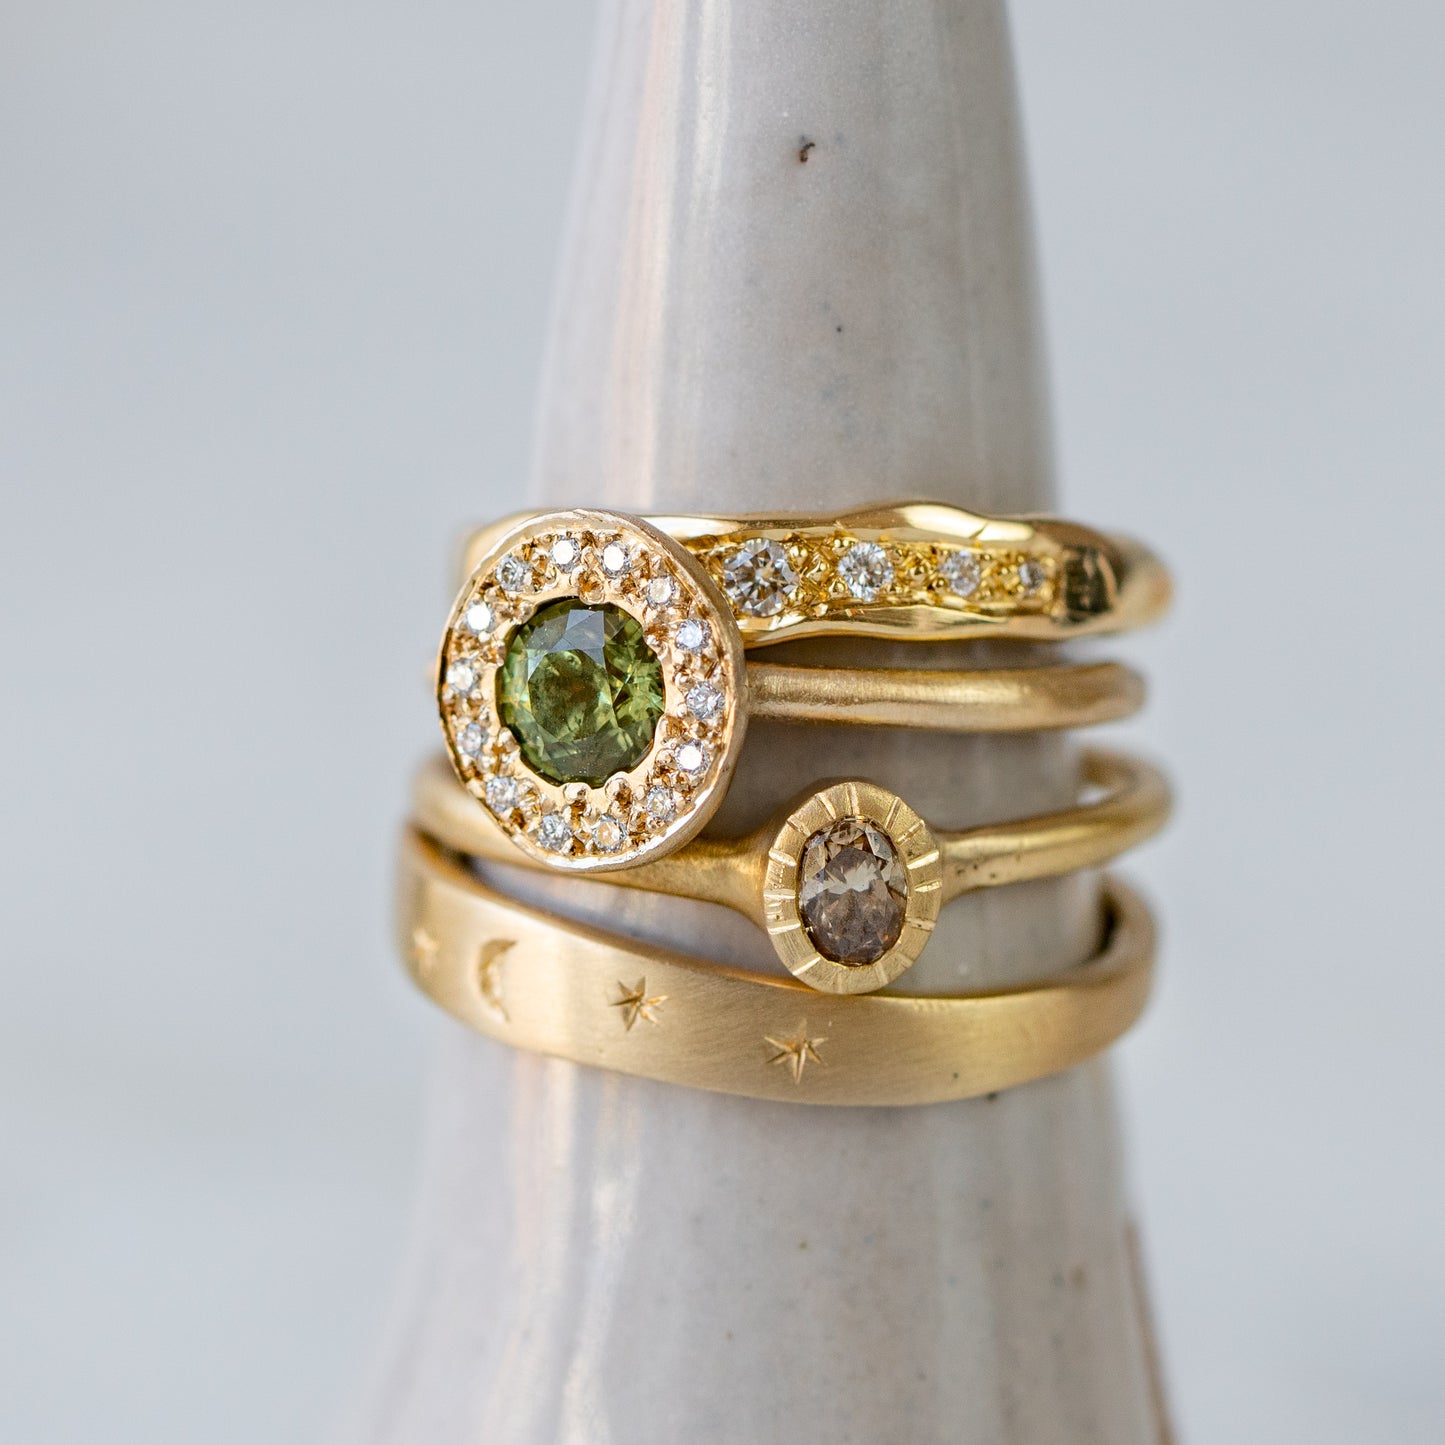 Green Sapphire and Diamond Pebble Ring